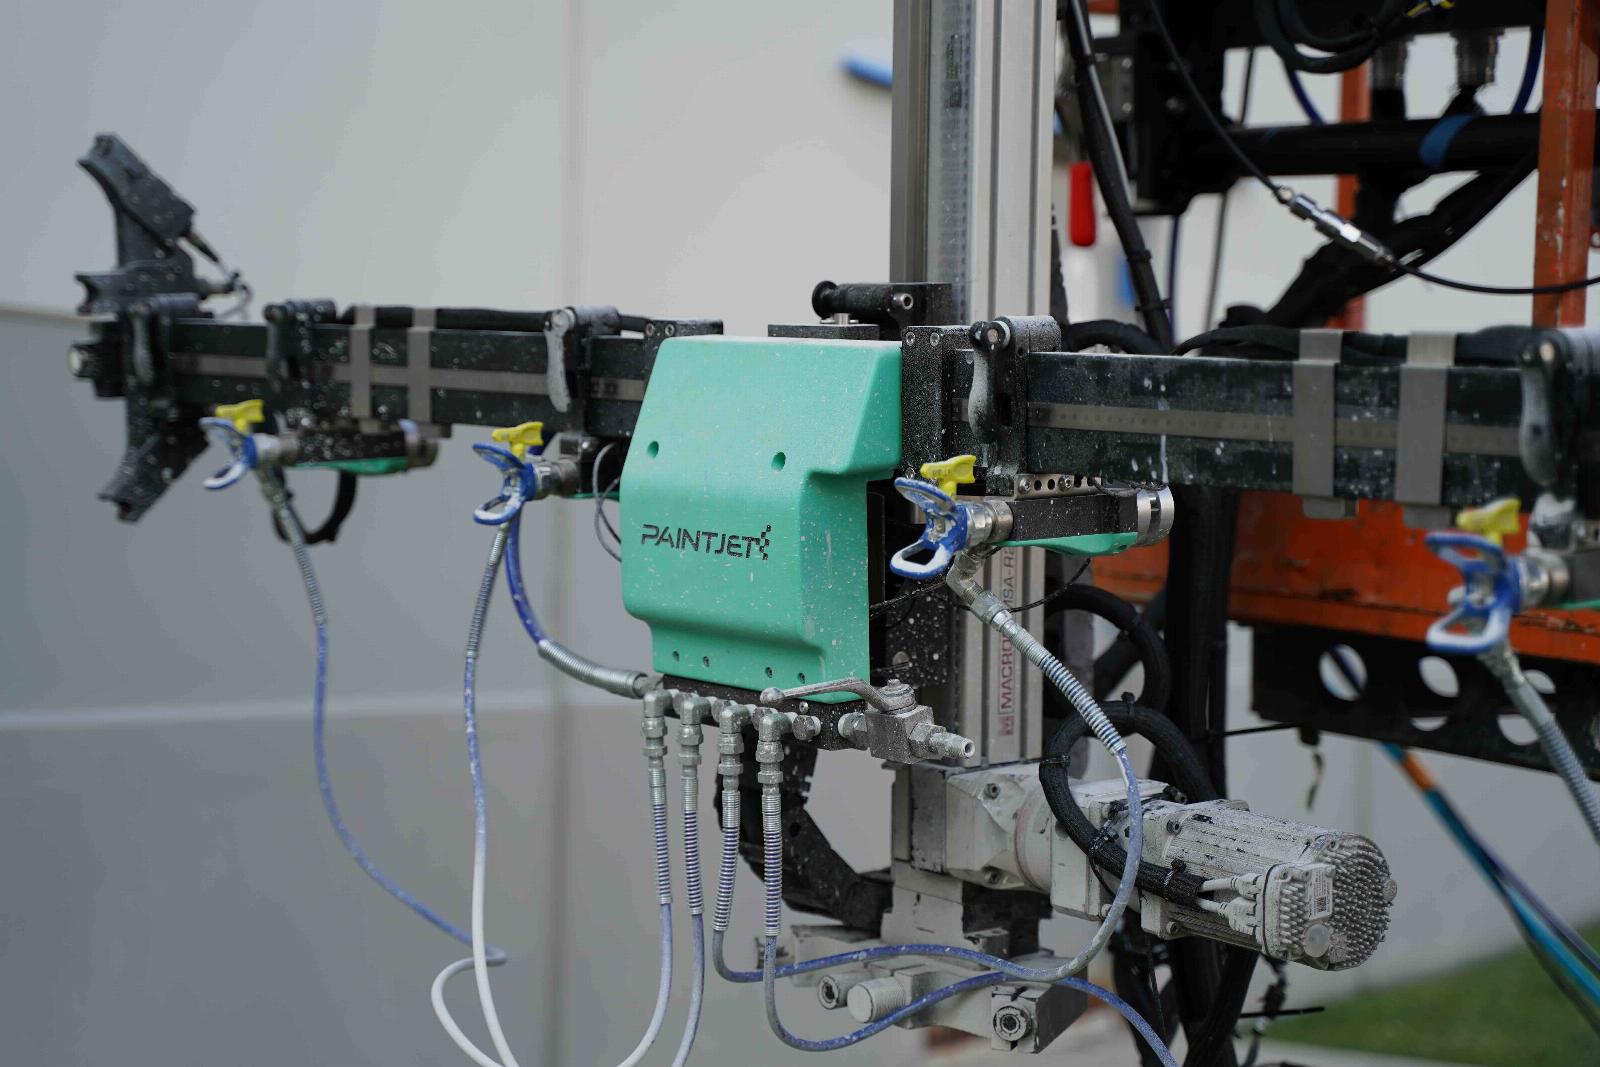 PaintJet is building big industrial robots for big industrial paint jobs